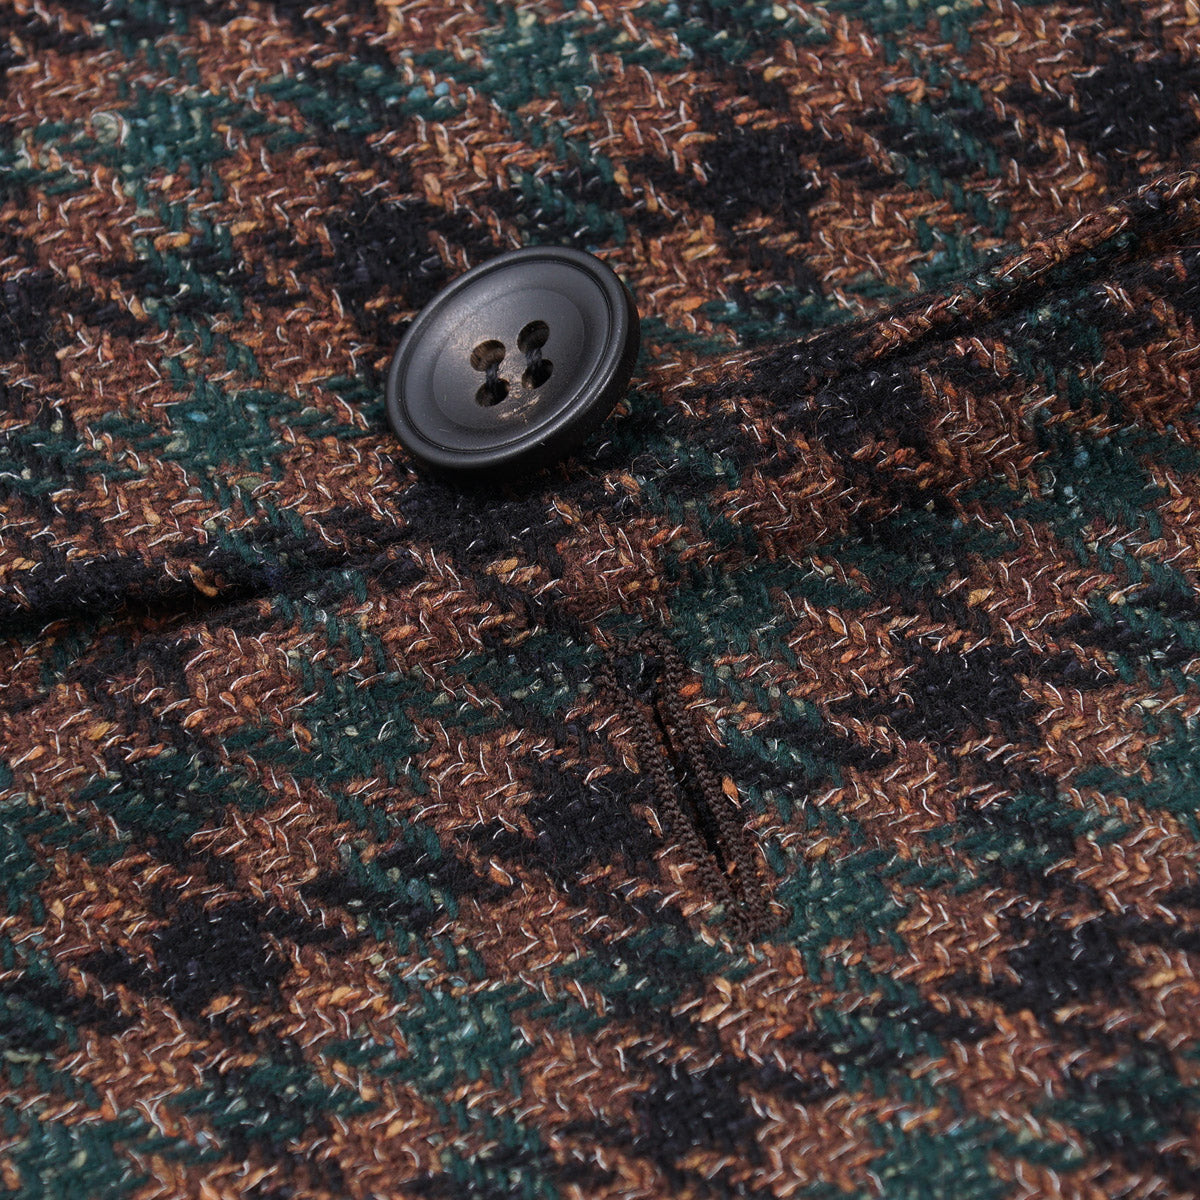 Sartorio Wool and Silk Sport Coat - Top Shelf Apparel